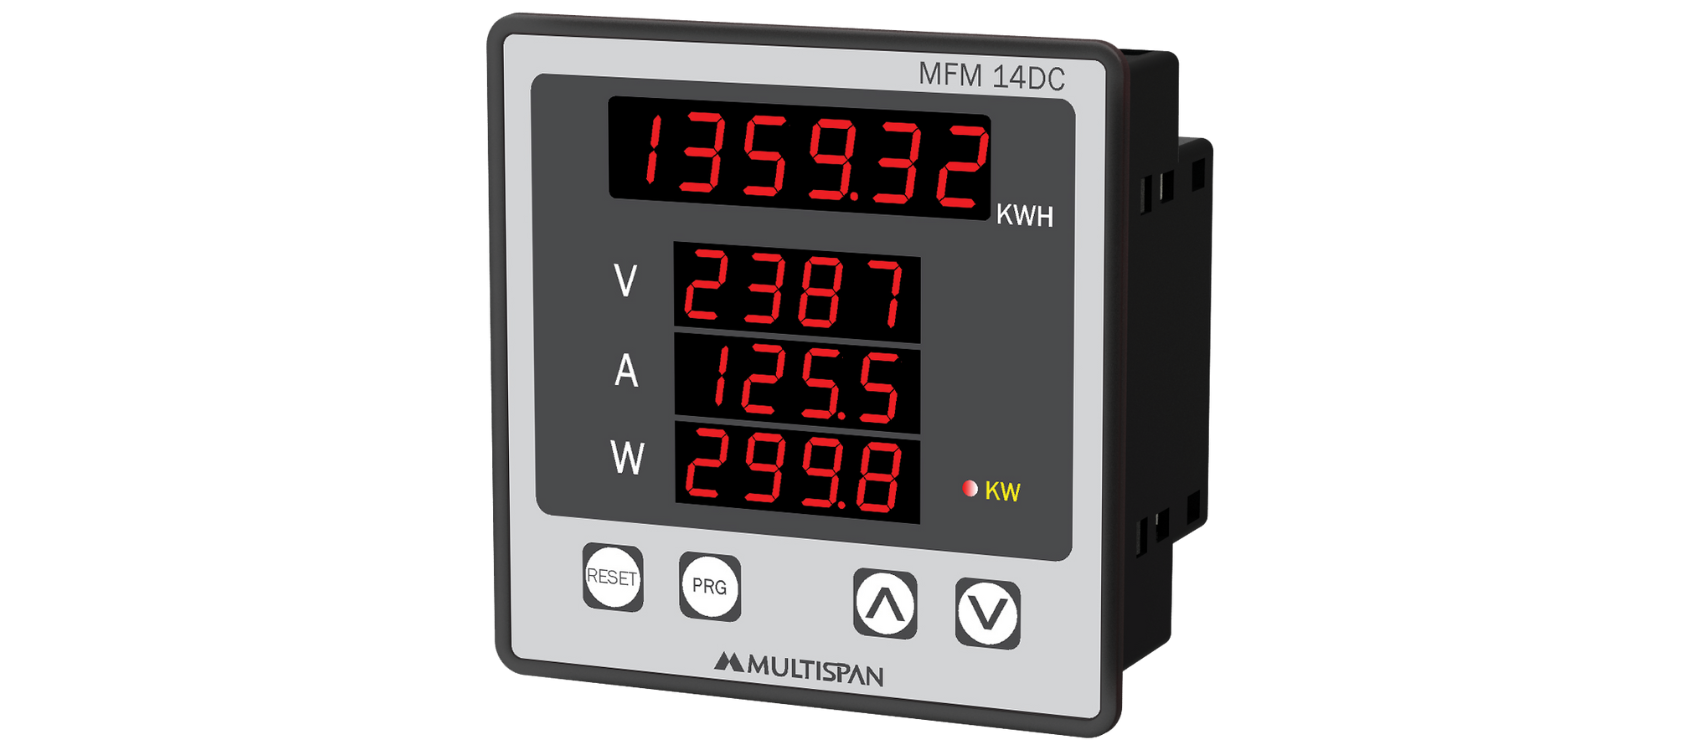  MFM-14DC - DC Multifunction Meter - product image